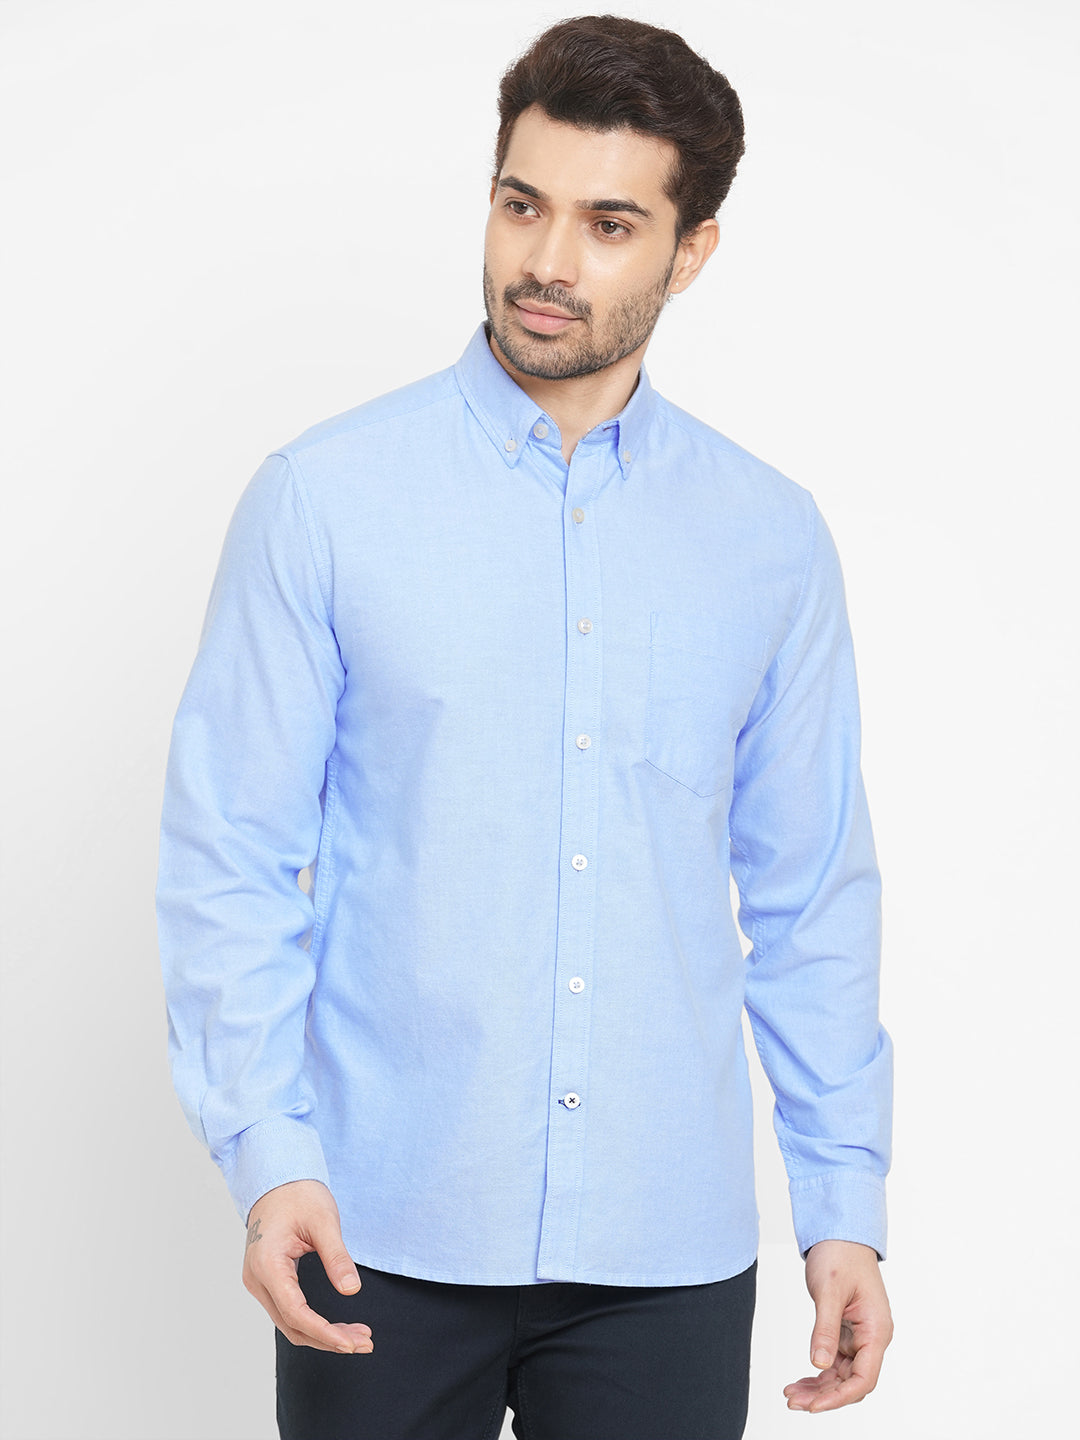 Men's Oxford Cotton Button down Collar Long Sleeved Shirt - Blue